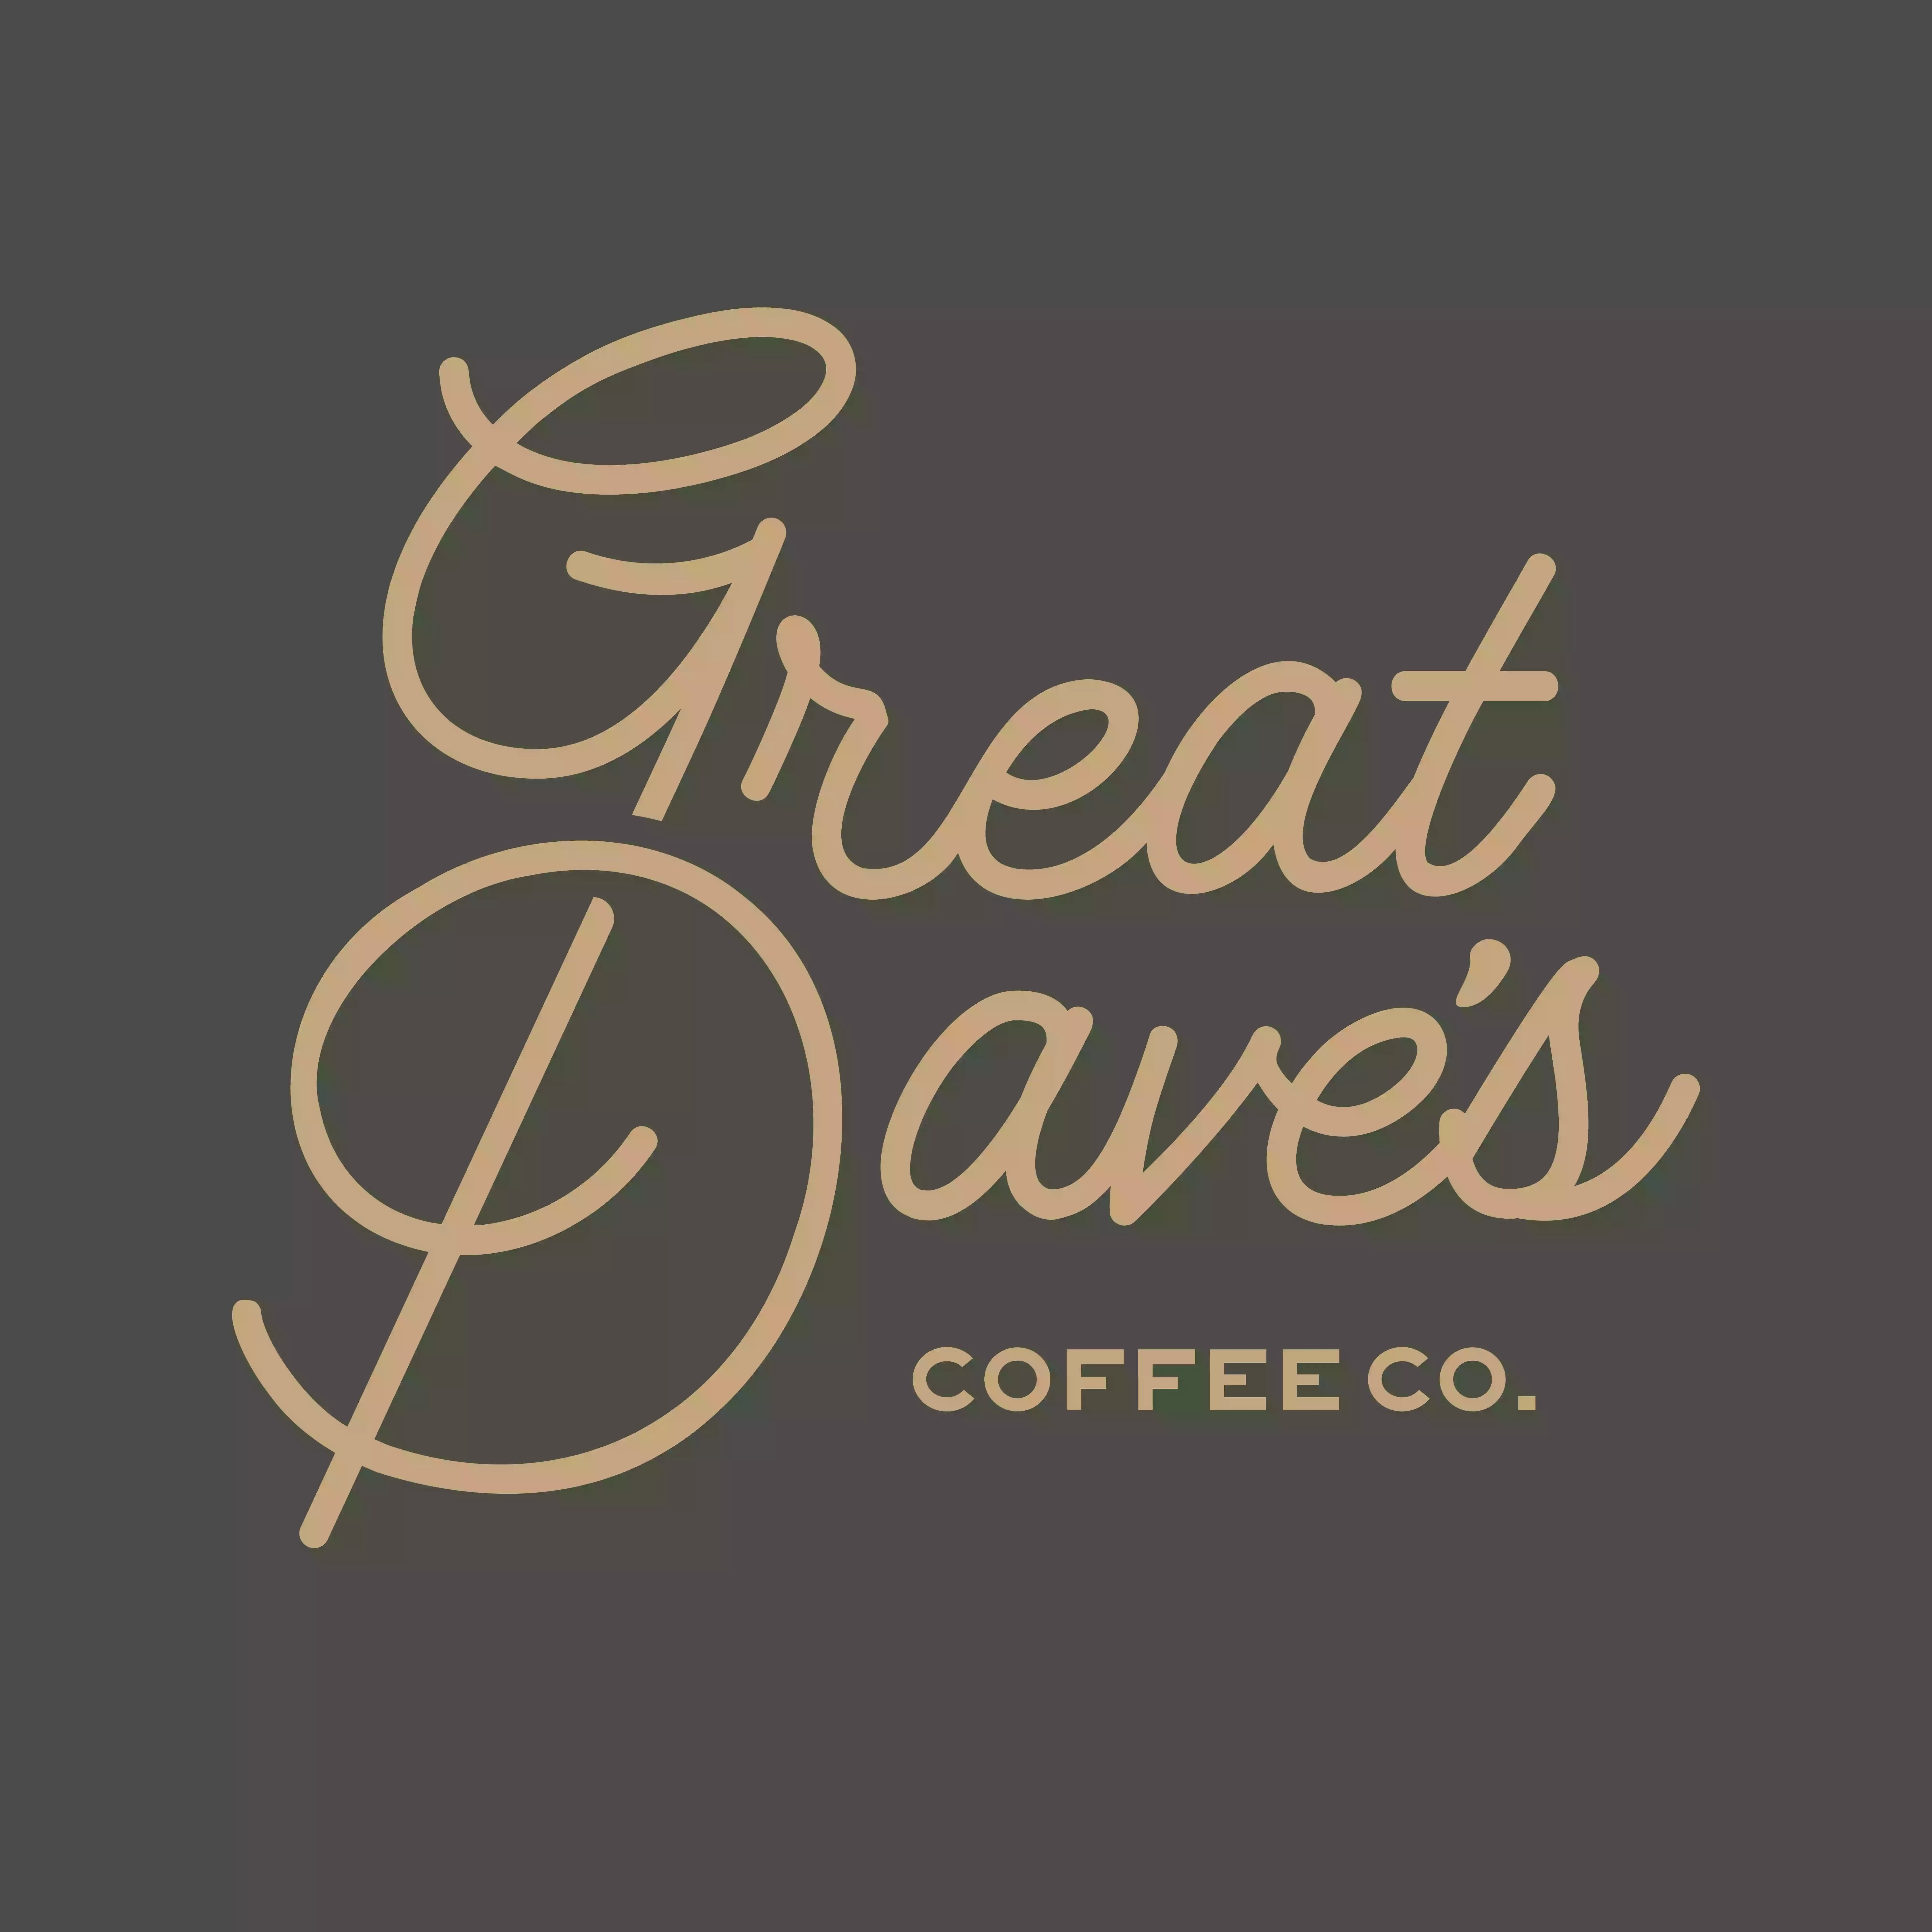 Great Dave's Coffee Company